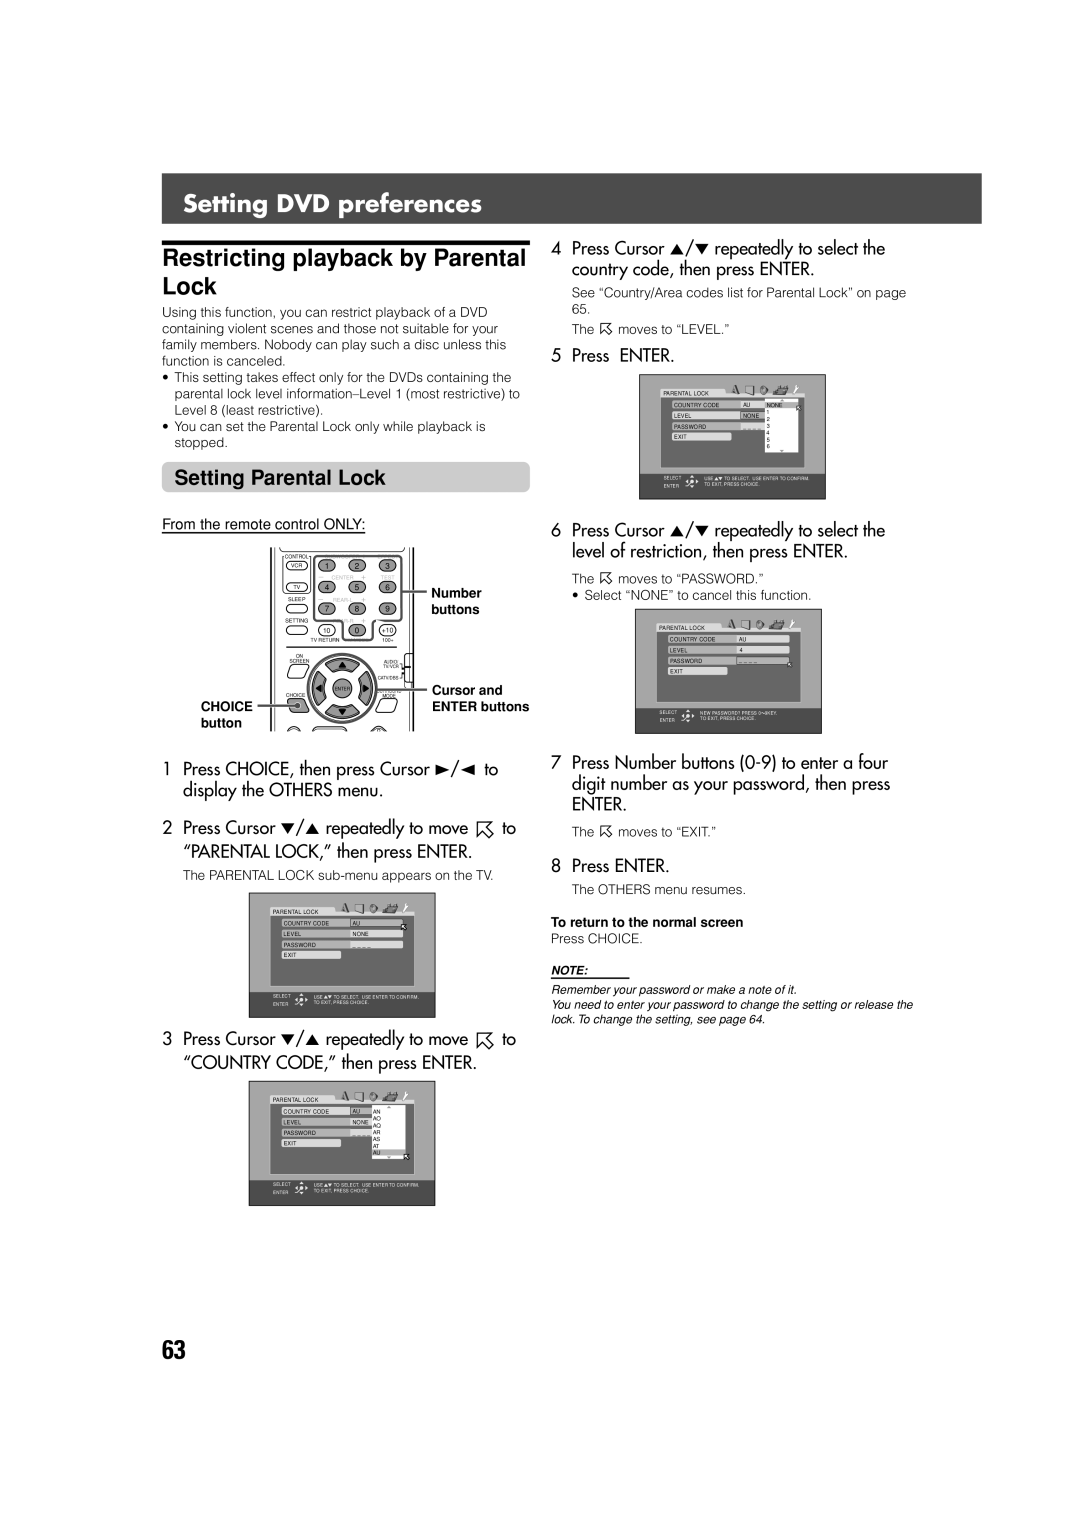 JVC SP-XSV70, SP-PWV70 manual Restricting playback by Parental Lock, Setting Parental Lock, Setting DVD preferences 